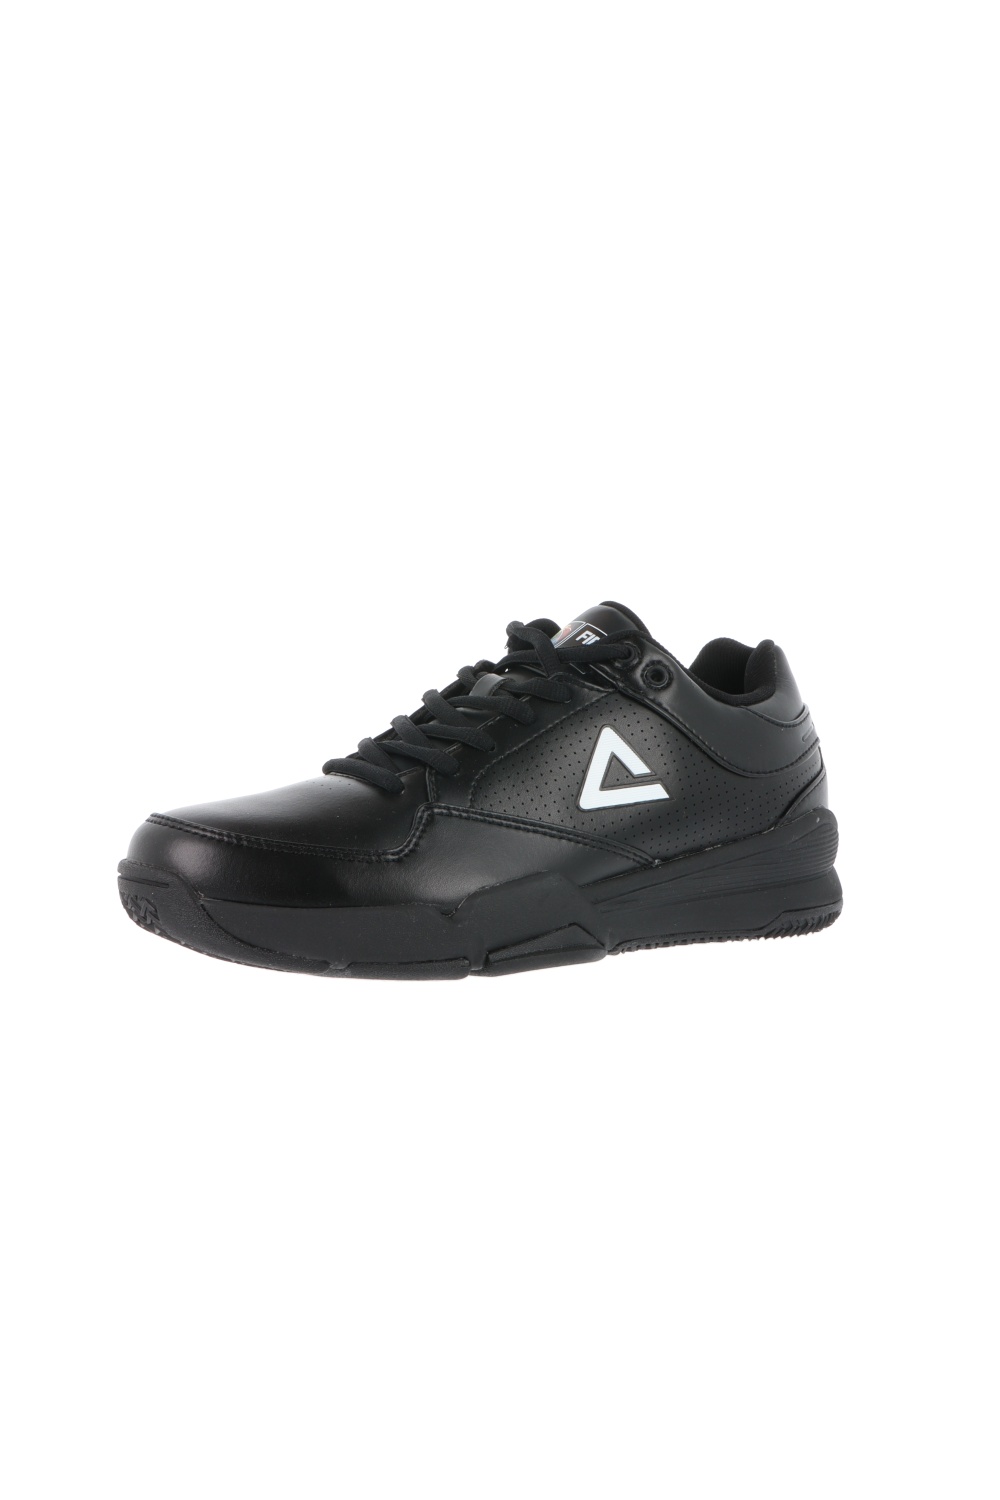 Peak FIBA Mens Basketball Referee Shoes - Black